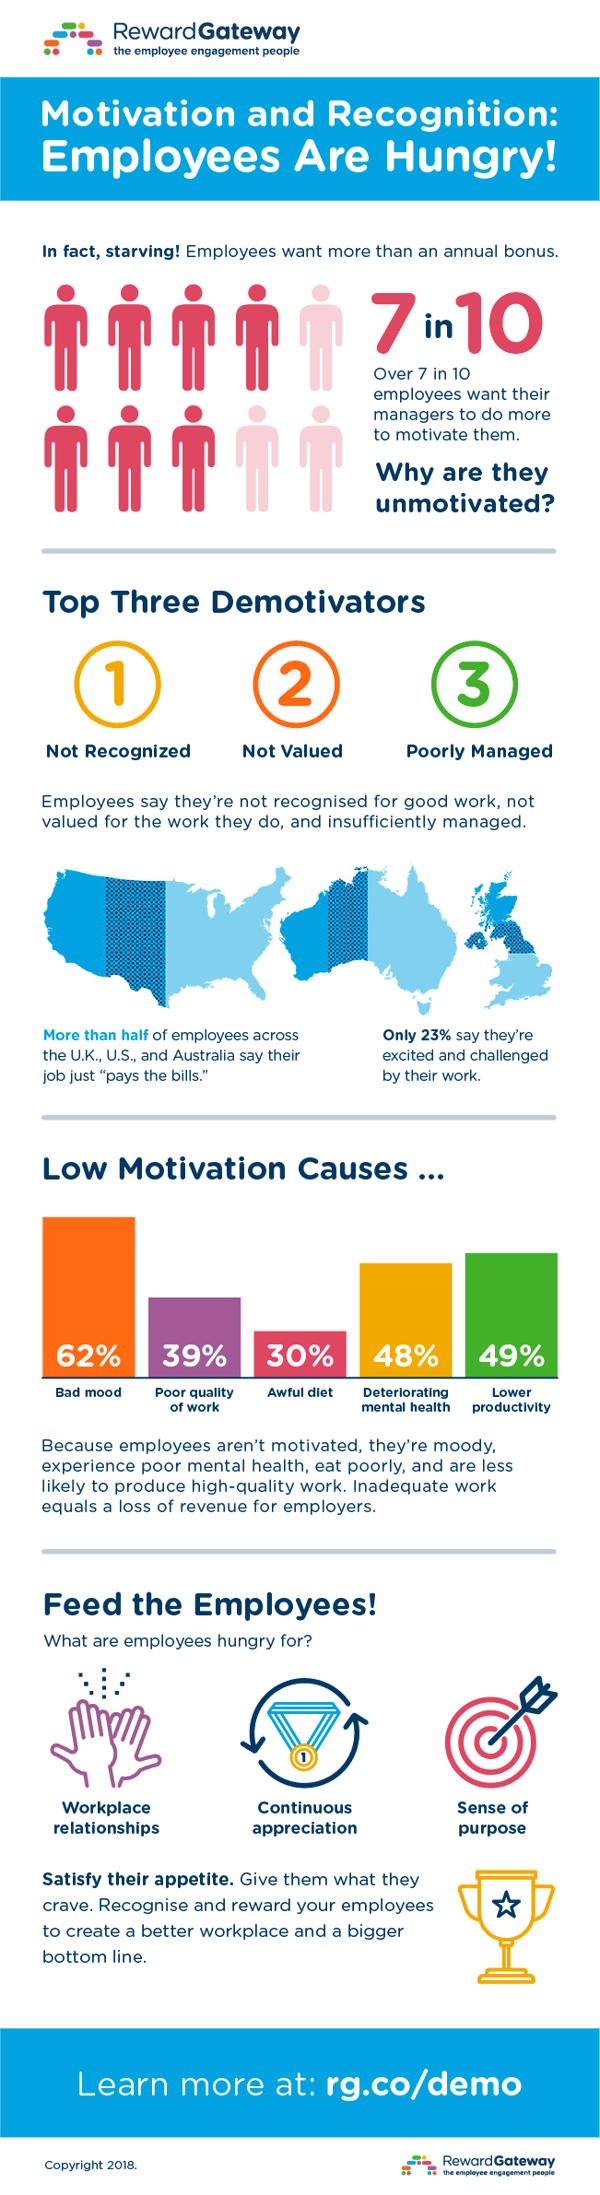 Reward-Gateway-Employee-Motivation-Infographic-2018-UK